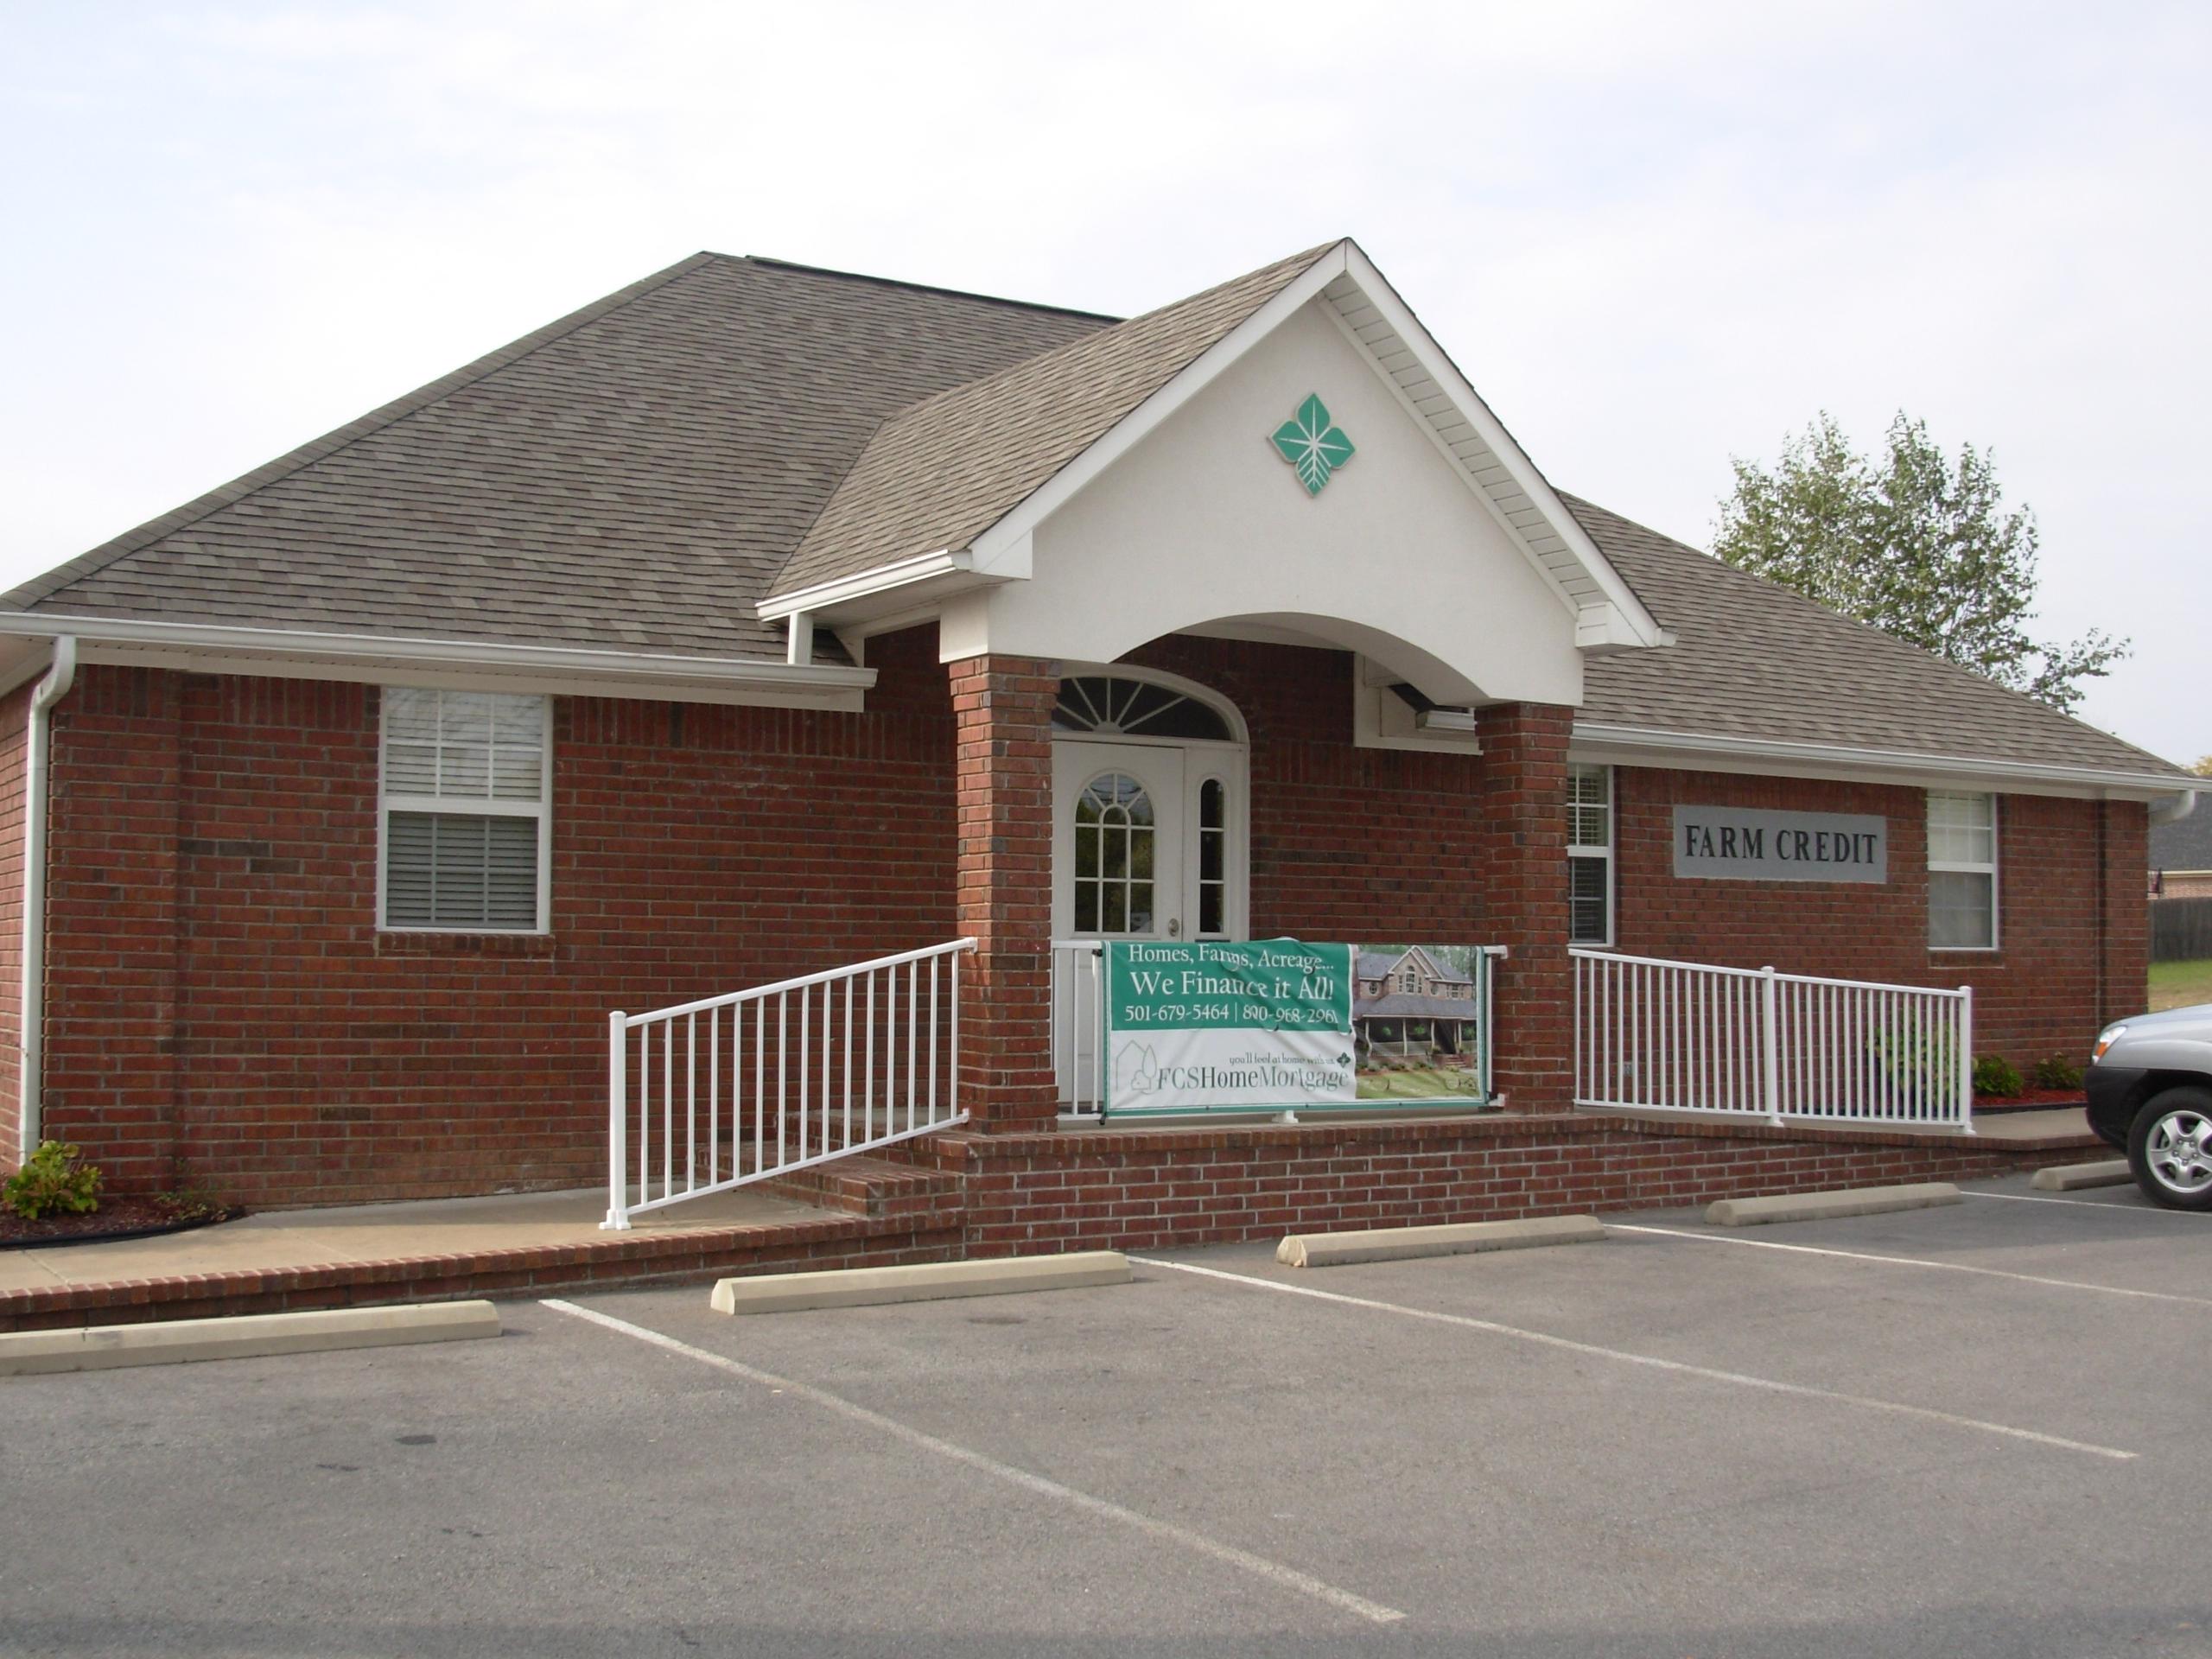 Greenbrier Farm Credit office